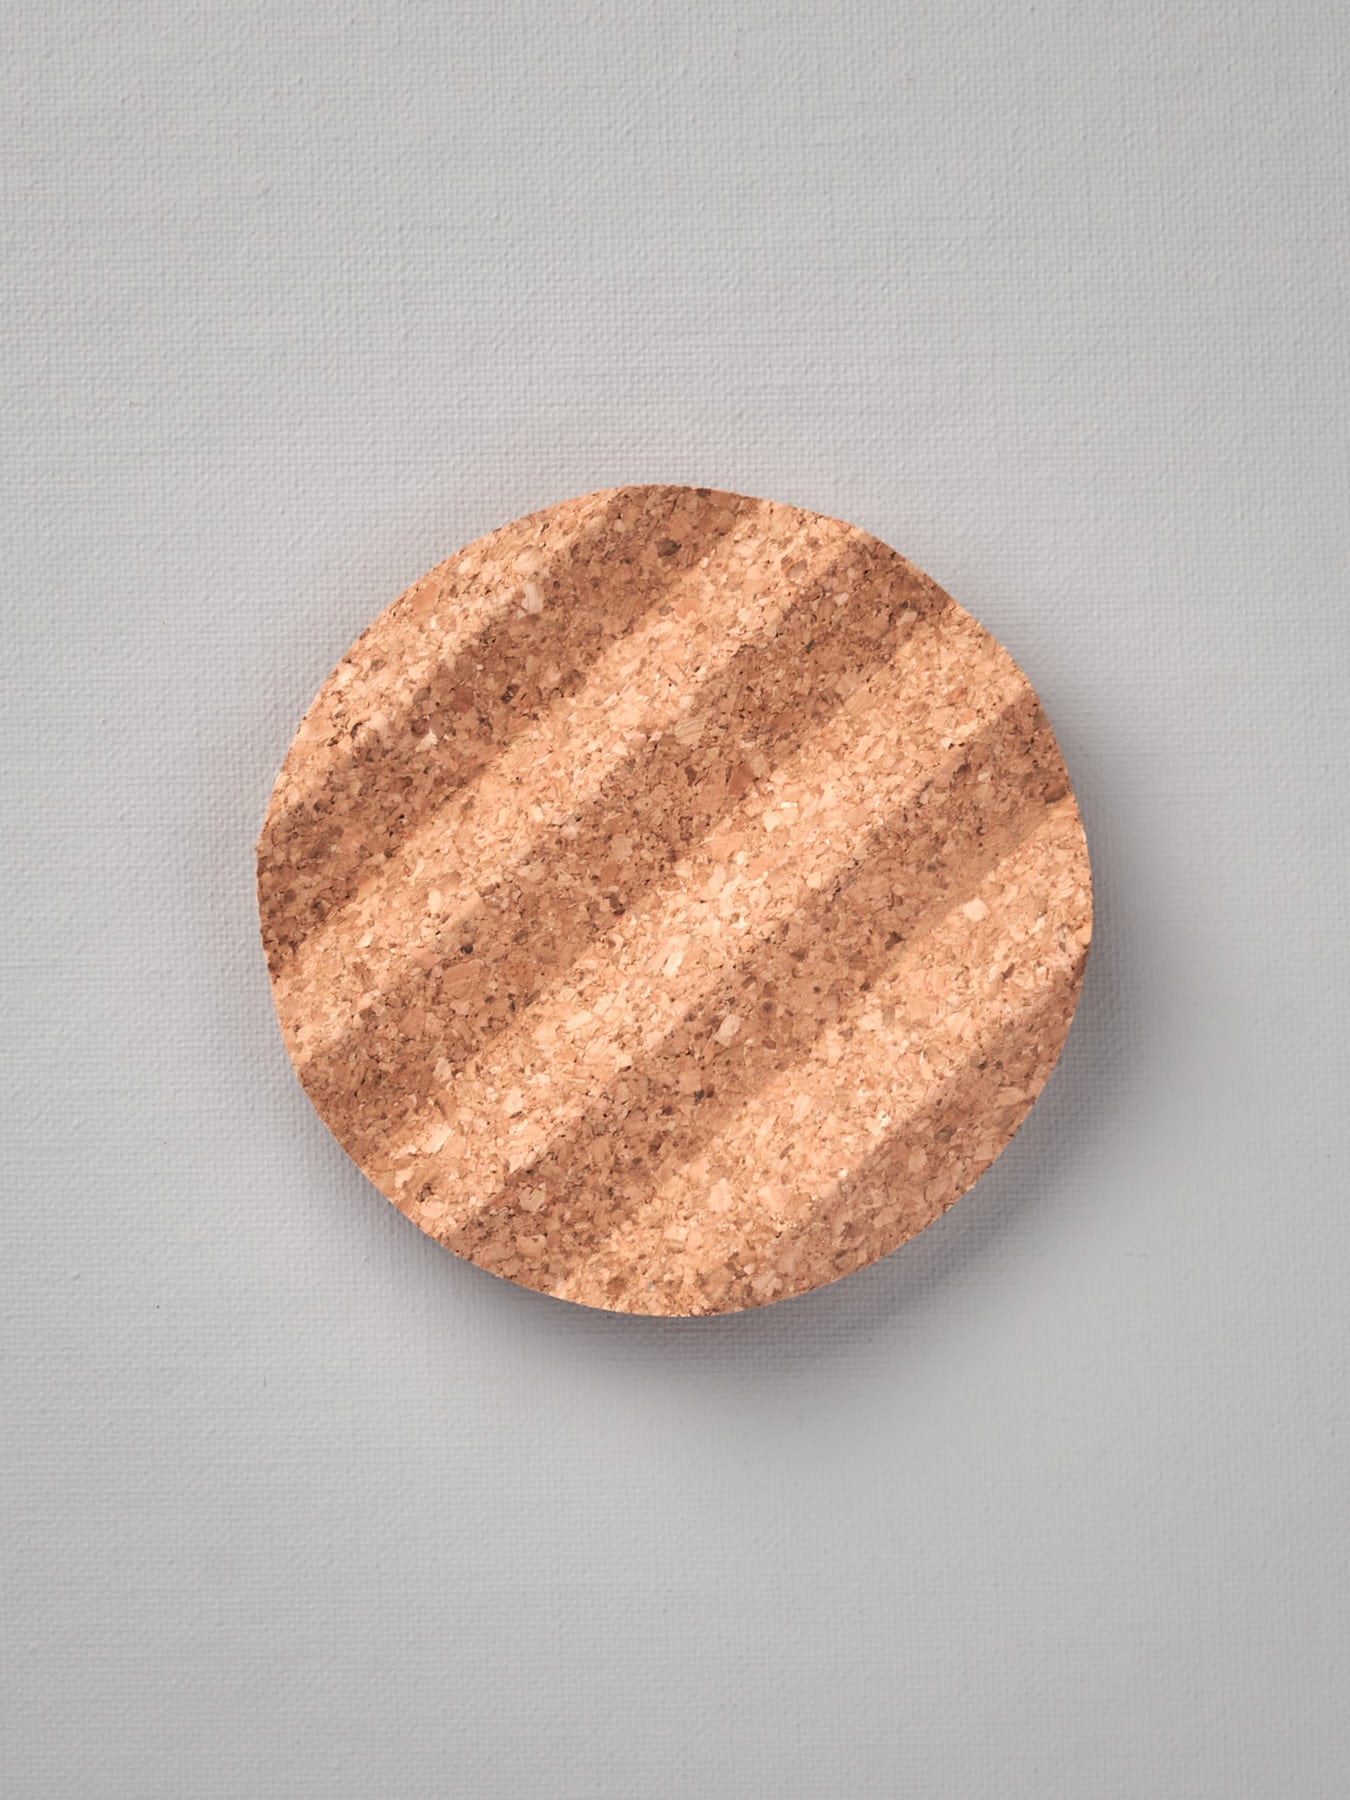 An Iris Hantverk Cork Soap Dish with a striped pattern on it.